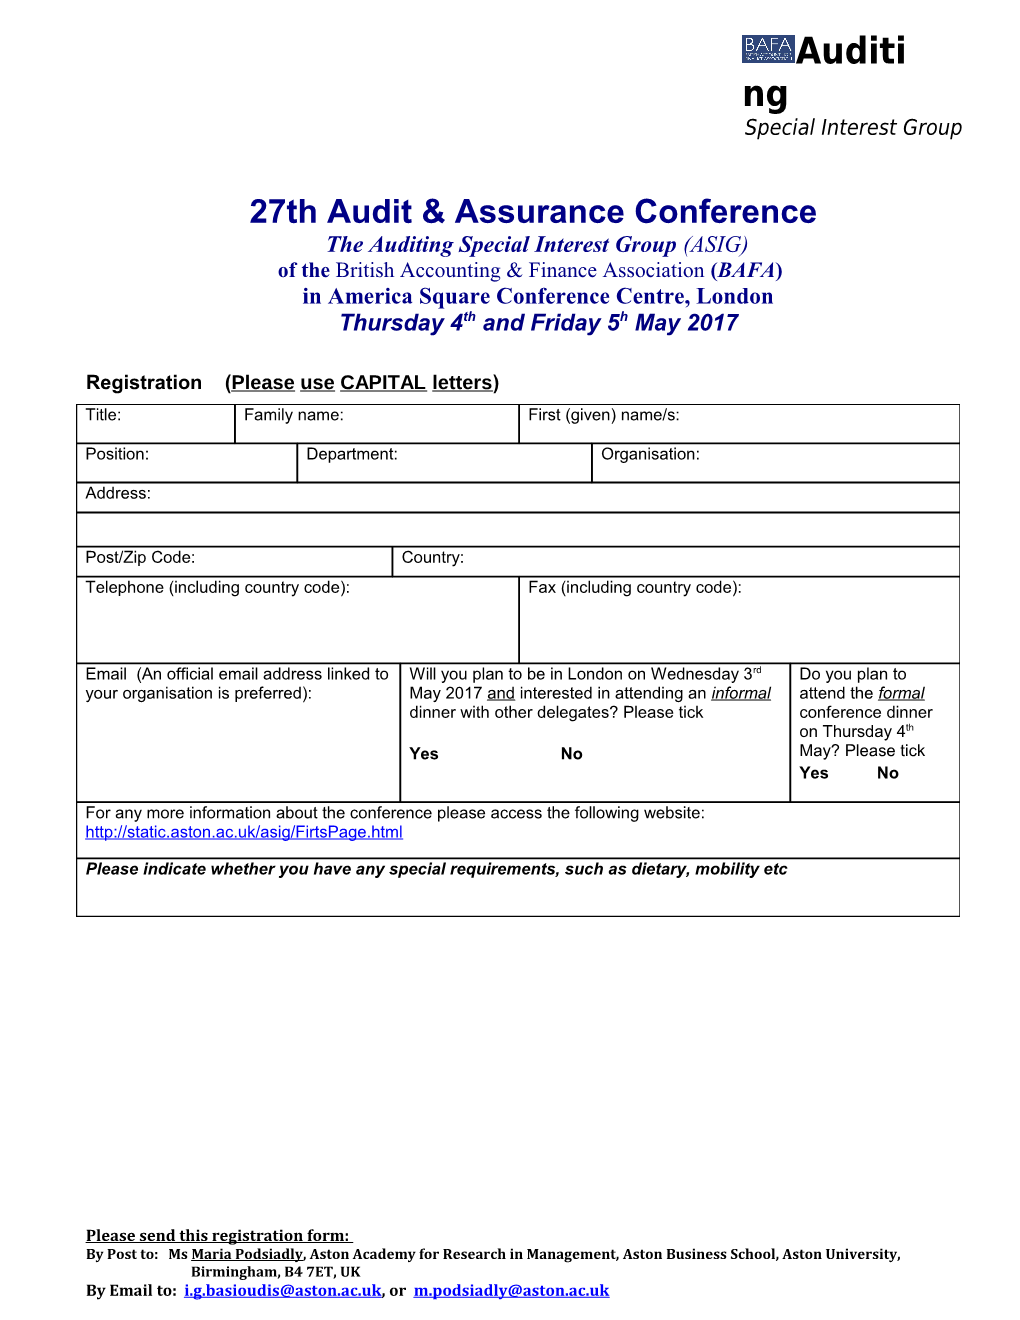 27Thaudit & Assurance Conference